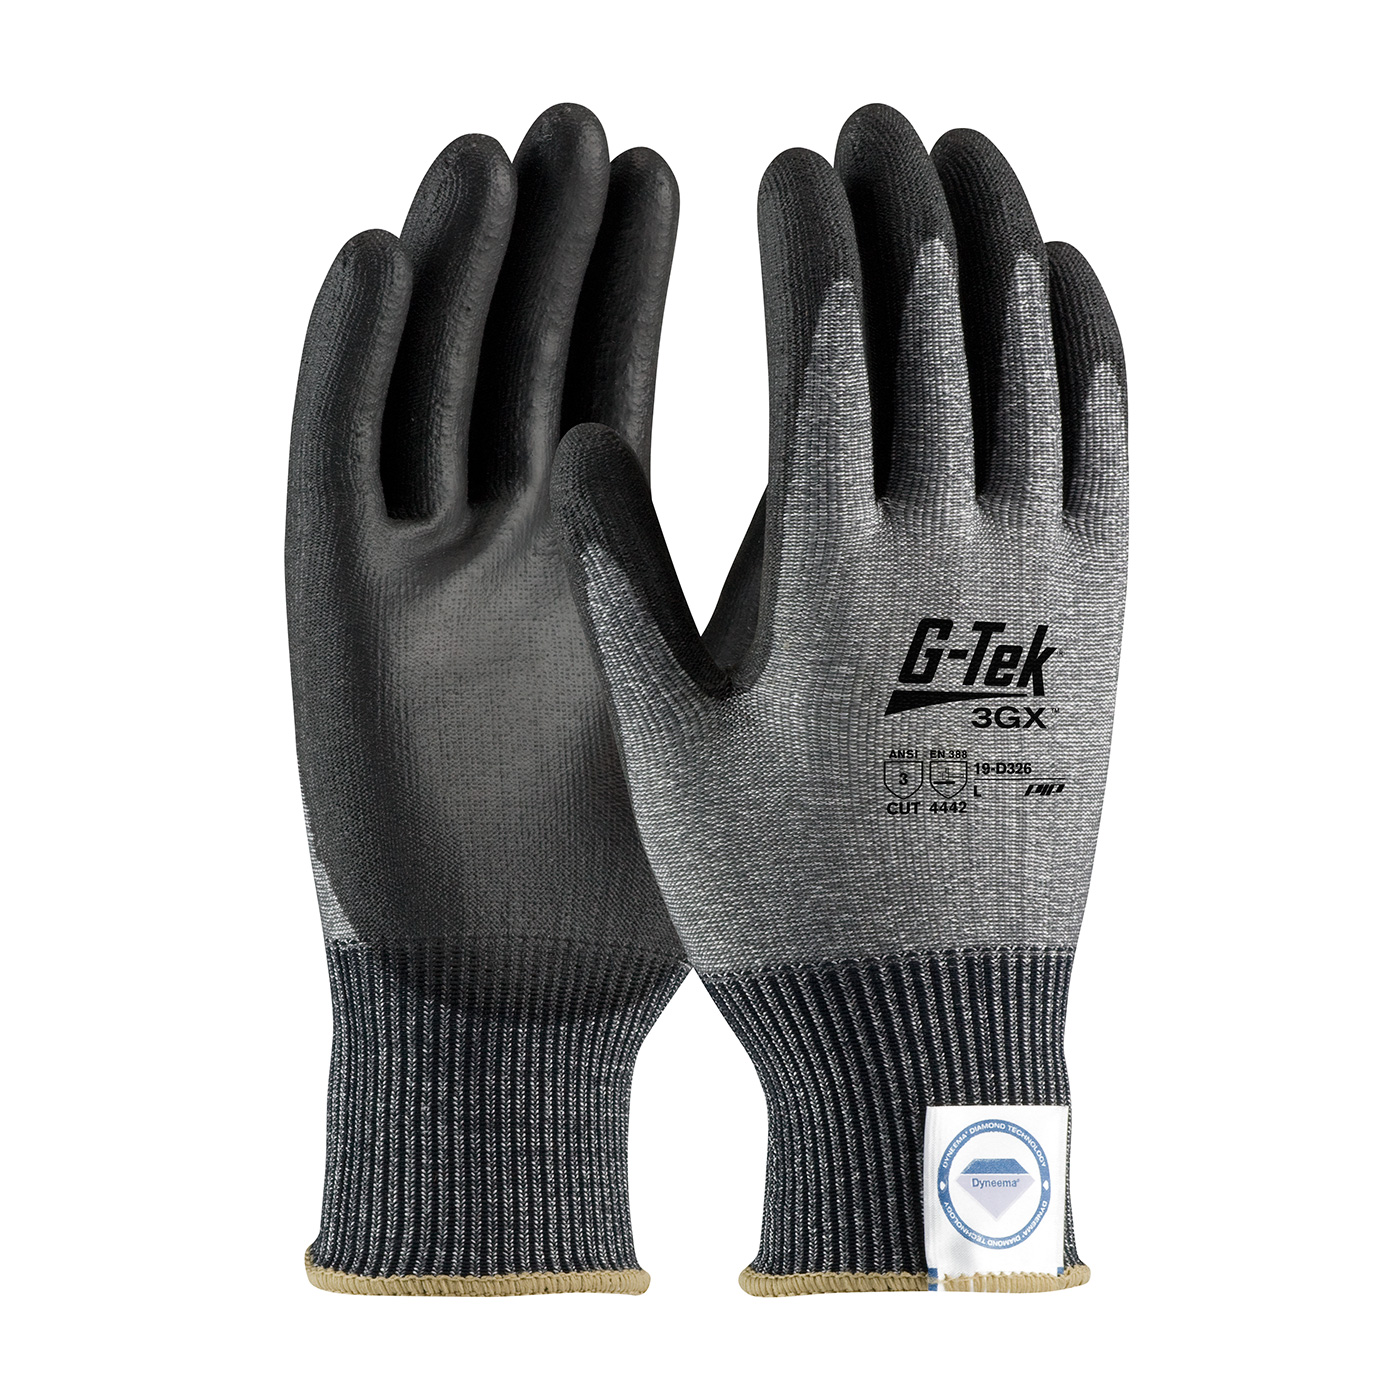 PIP 19-D326/M G-Tek 3GX Seamless Knit Dyneema Diamond Blended Glove with Polyurethane Coated Smooth Grip on Palm & Fingers - Medium PID-19D326M